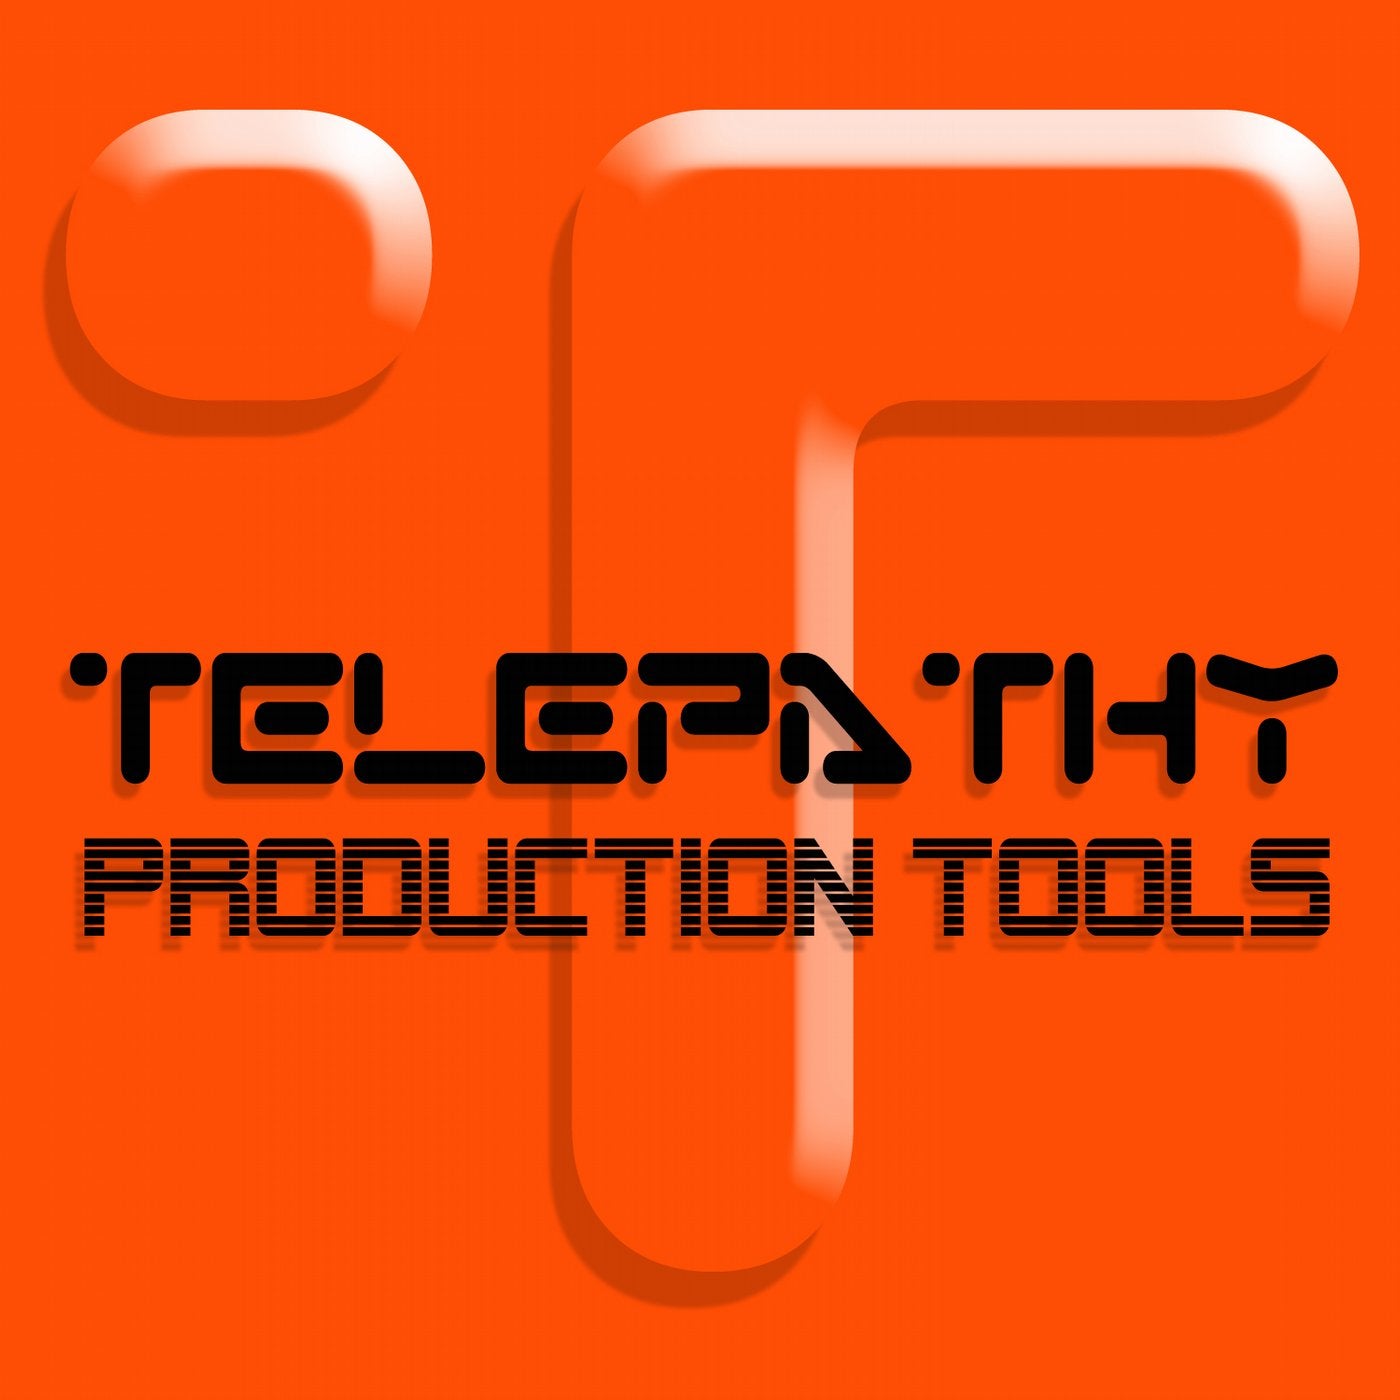 Telepathy Production Tools Volume 30